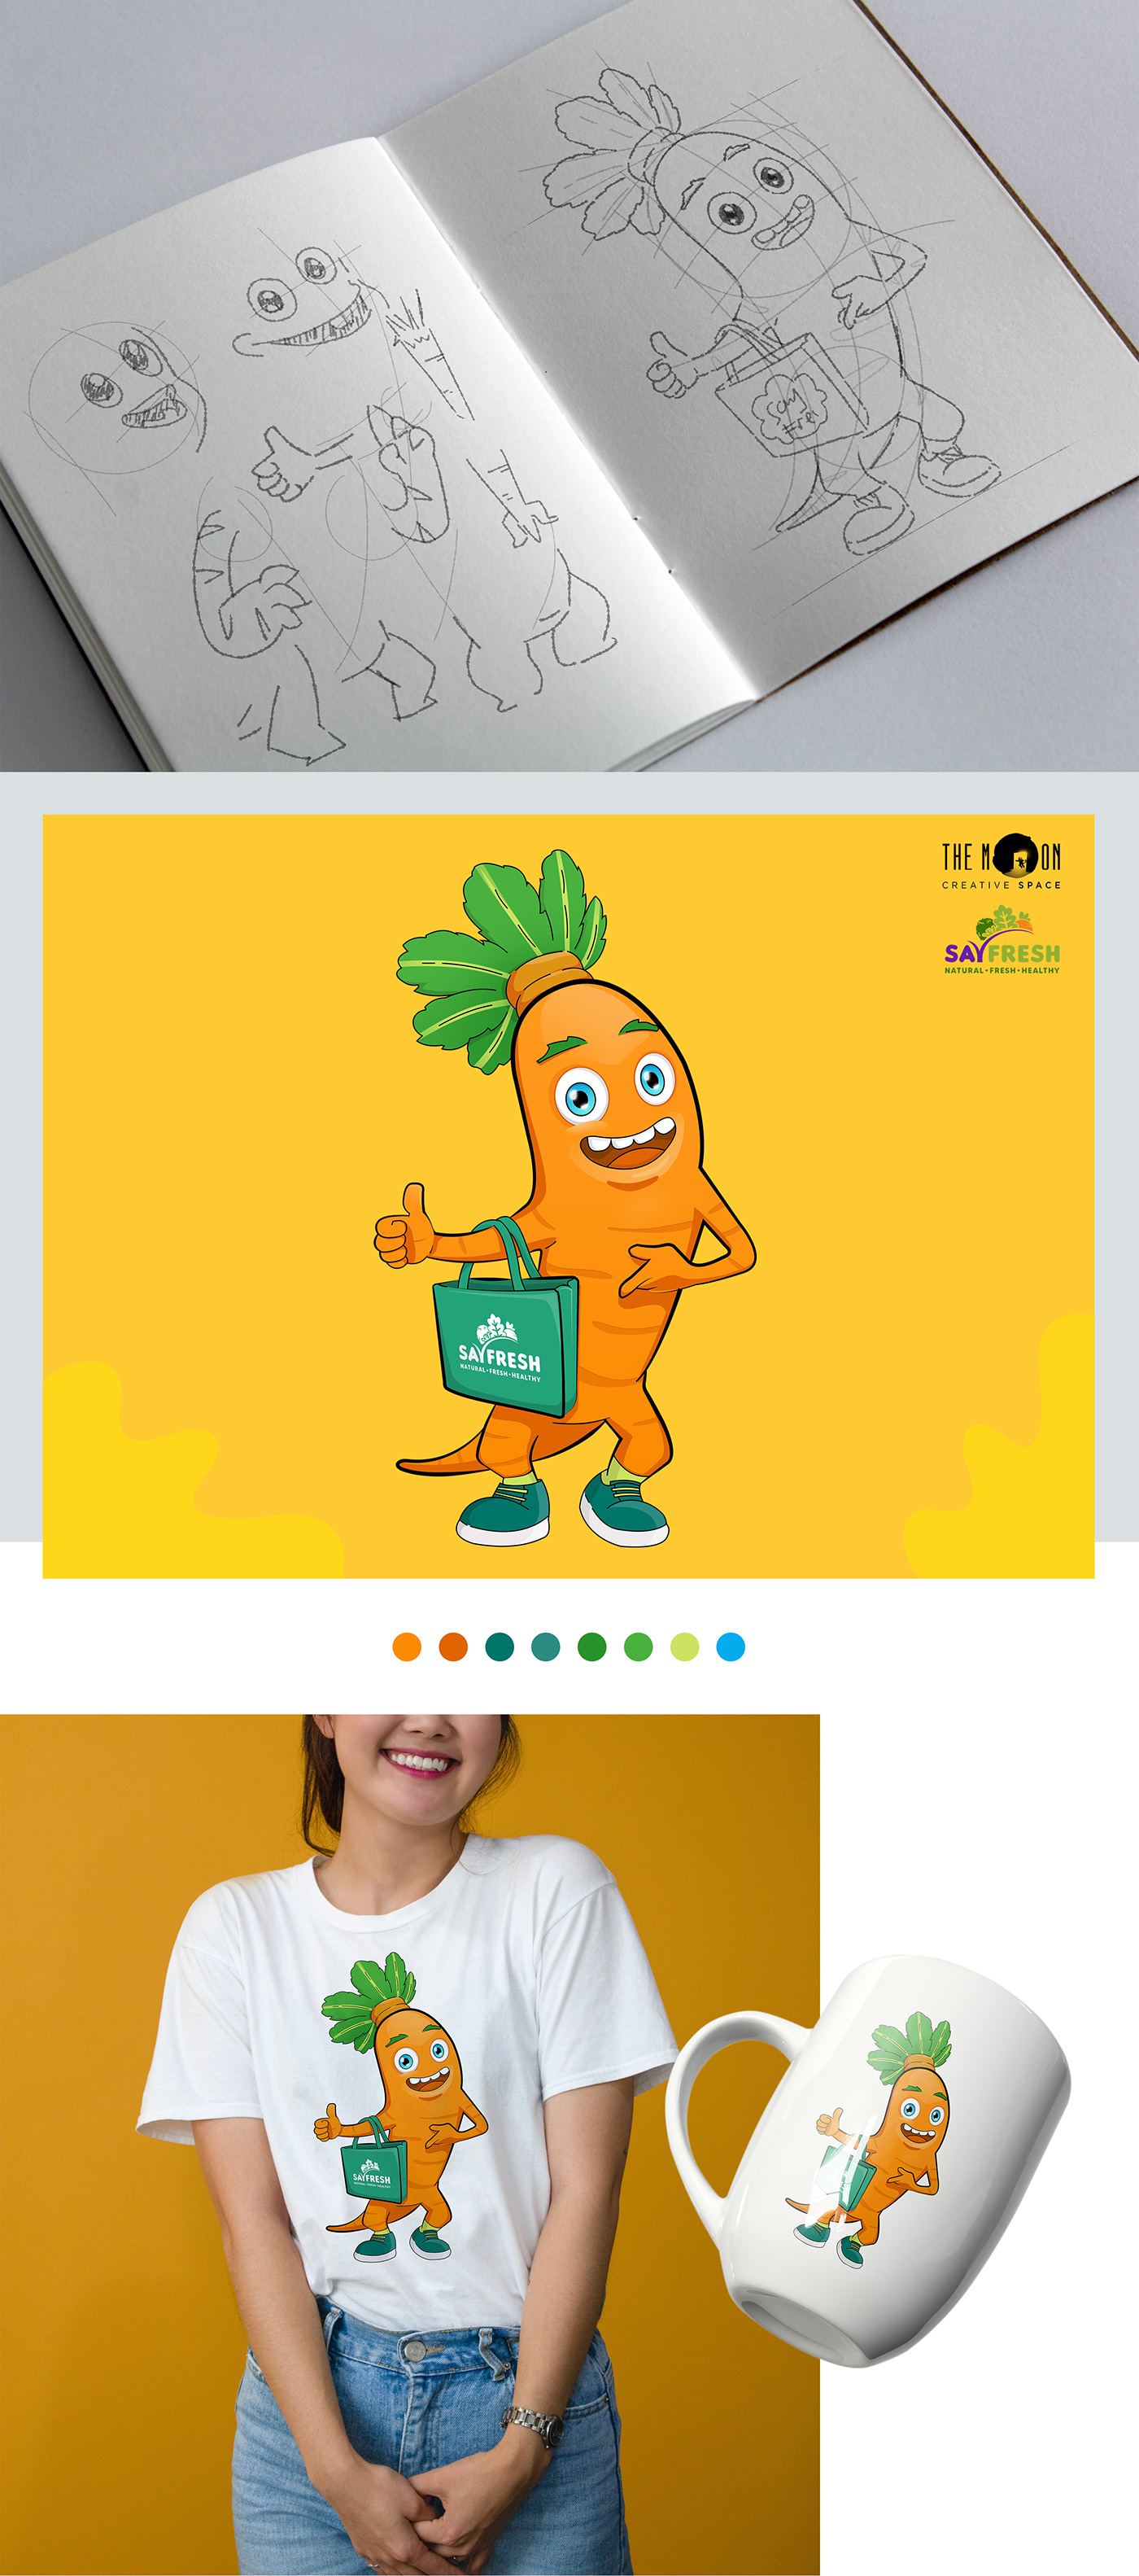 carrot mascot